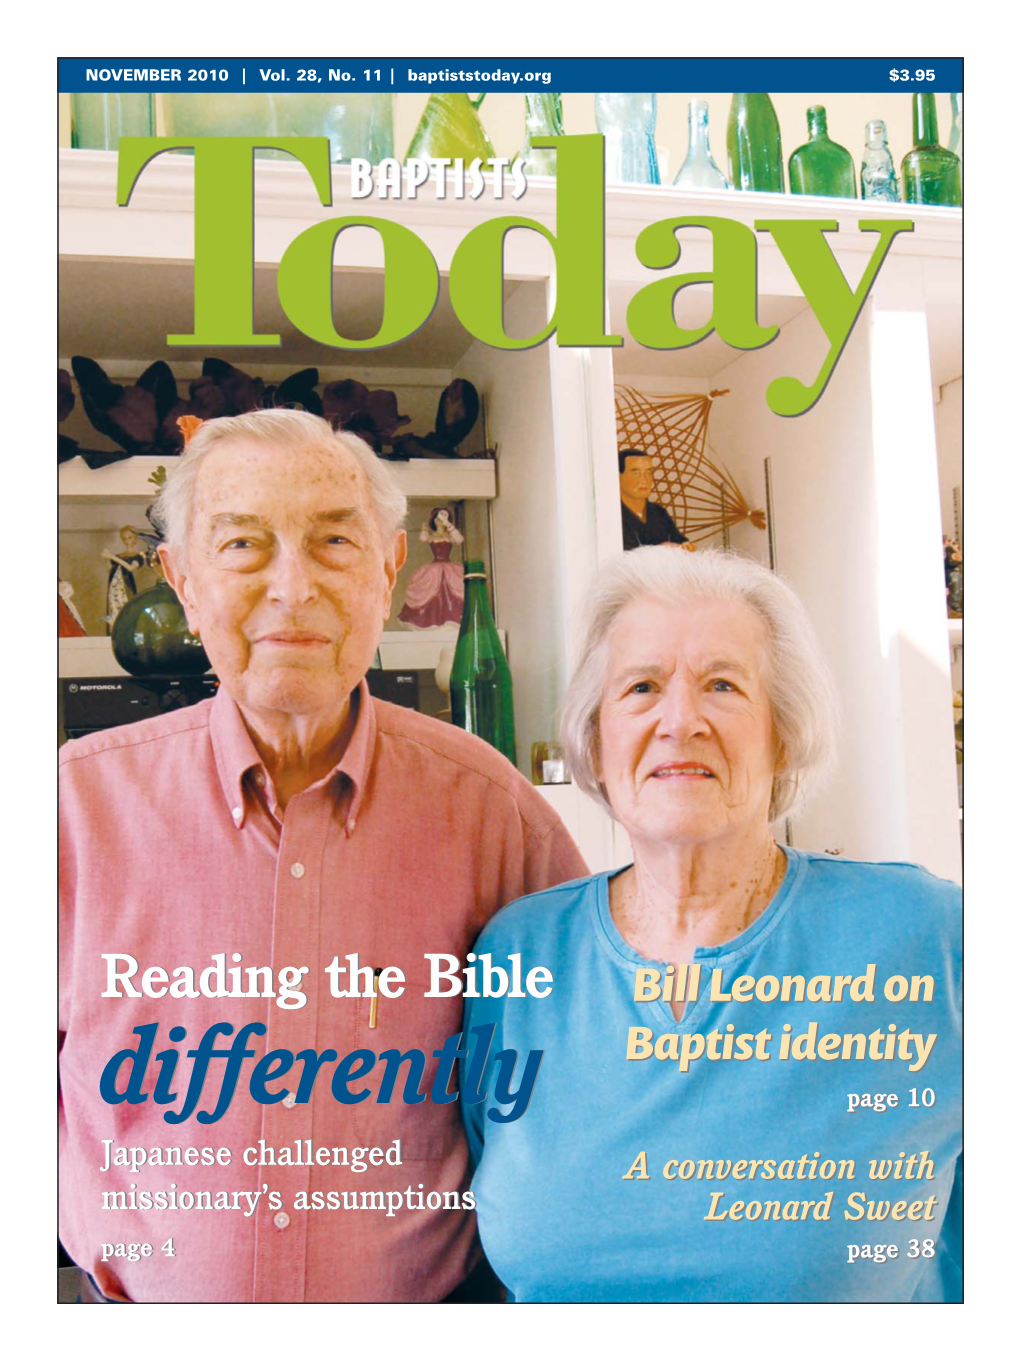 BT Nov10 Nat V4:2010 Baptists Today 10/14/10 8:18 AM Page 1